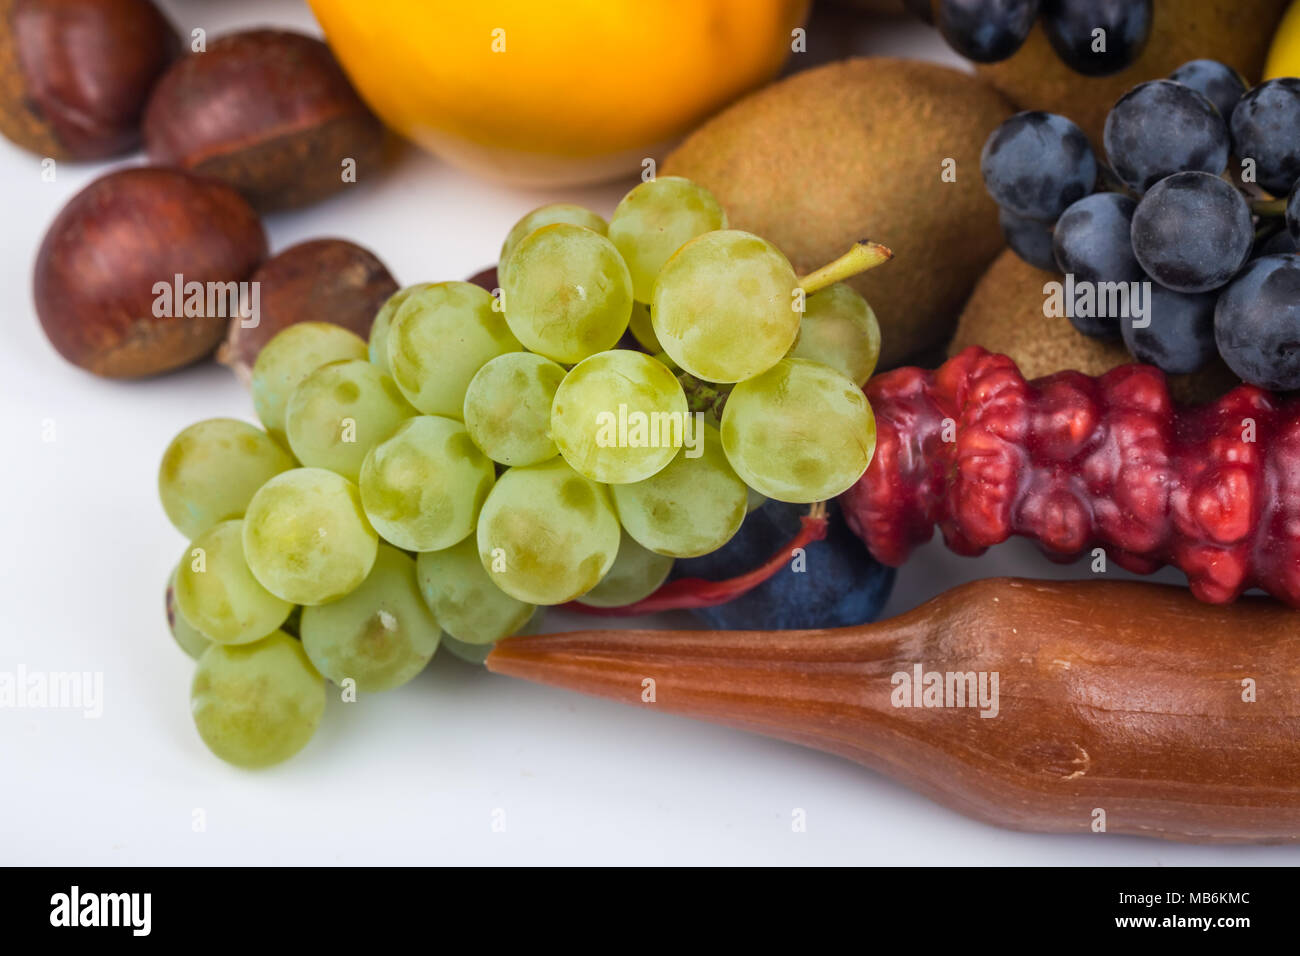 Fresh fruits isolated on a white background. Stock Photo